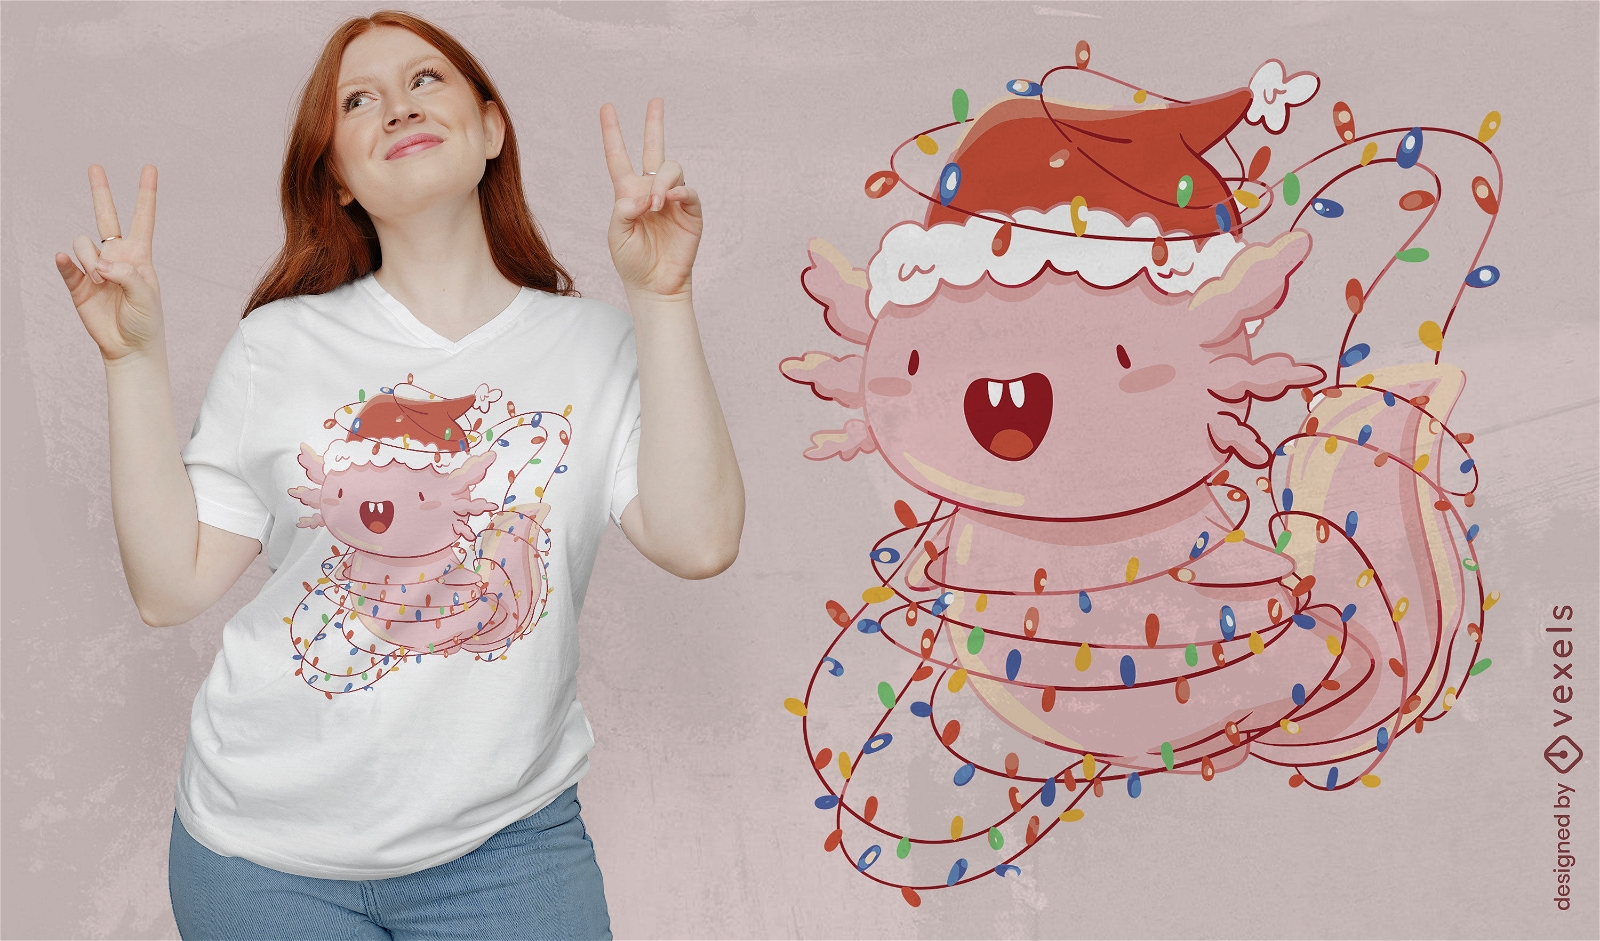 Axolotl-Weihnachtslicht-T-Shirt-Design